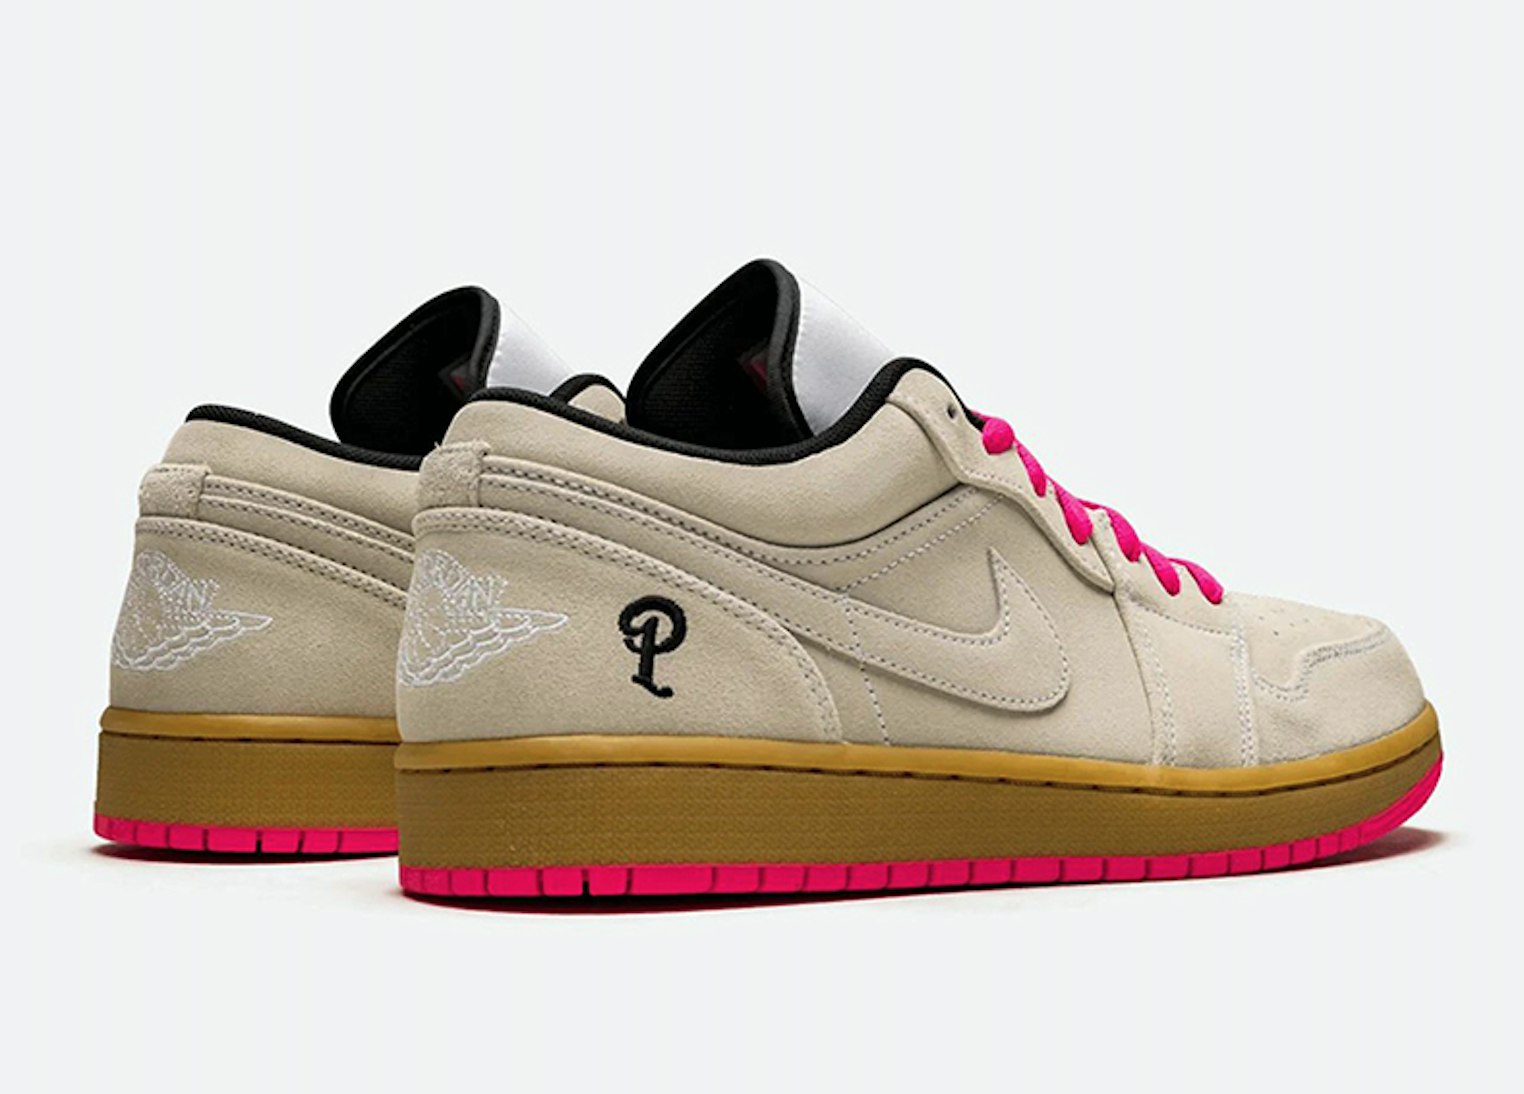 Sneaker Politics x Air Jordan 1 Low "Hyper Pink"